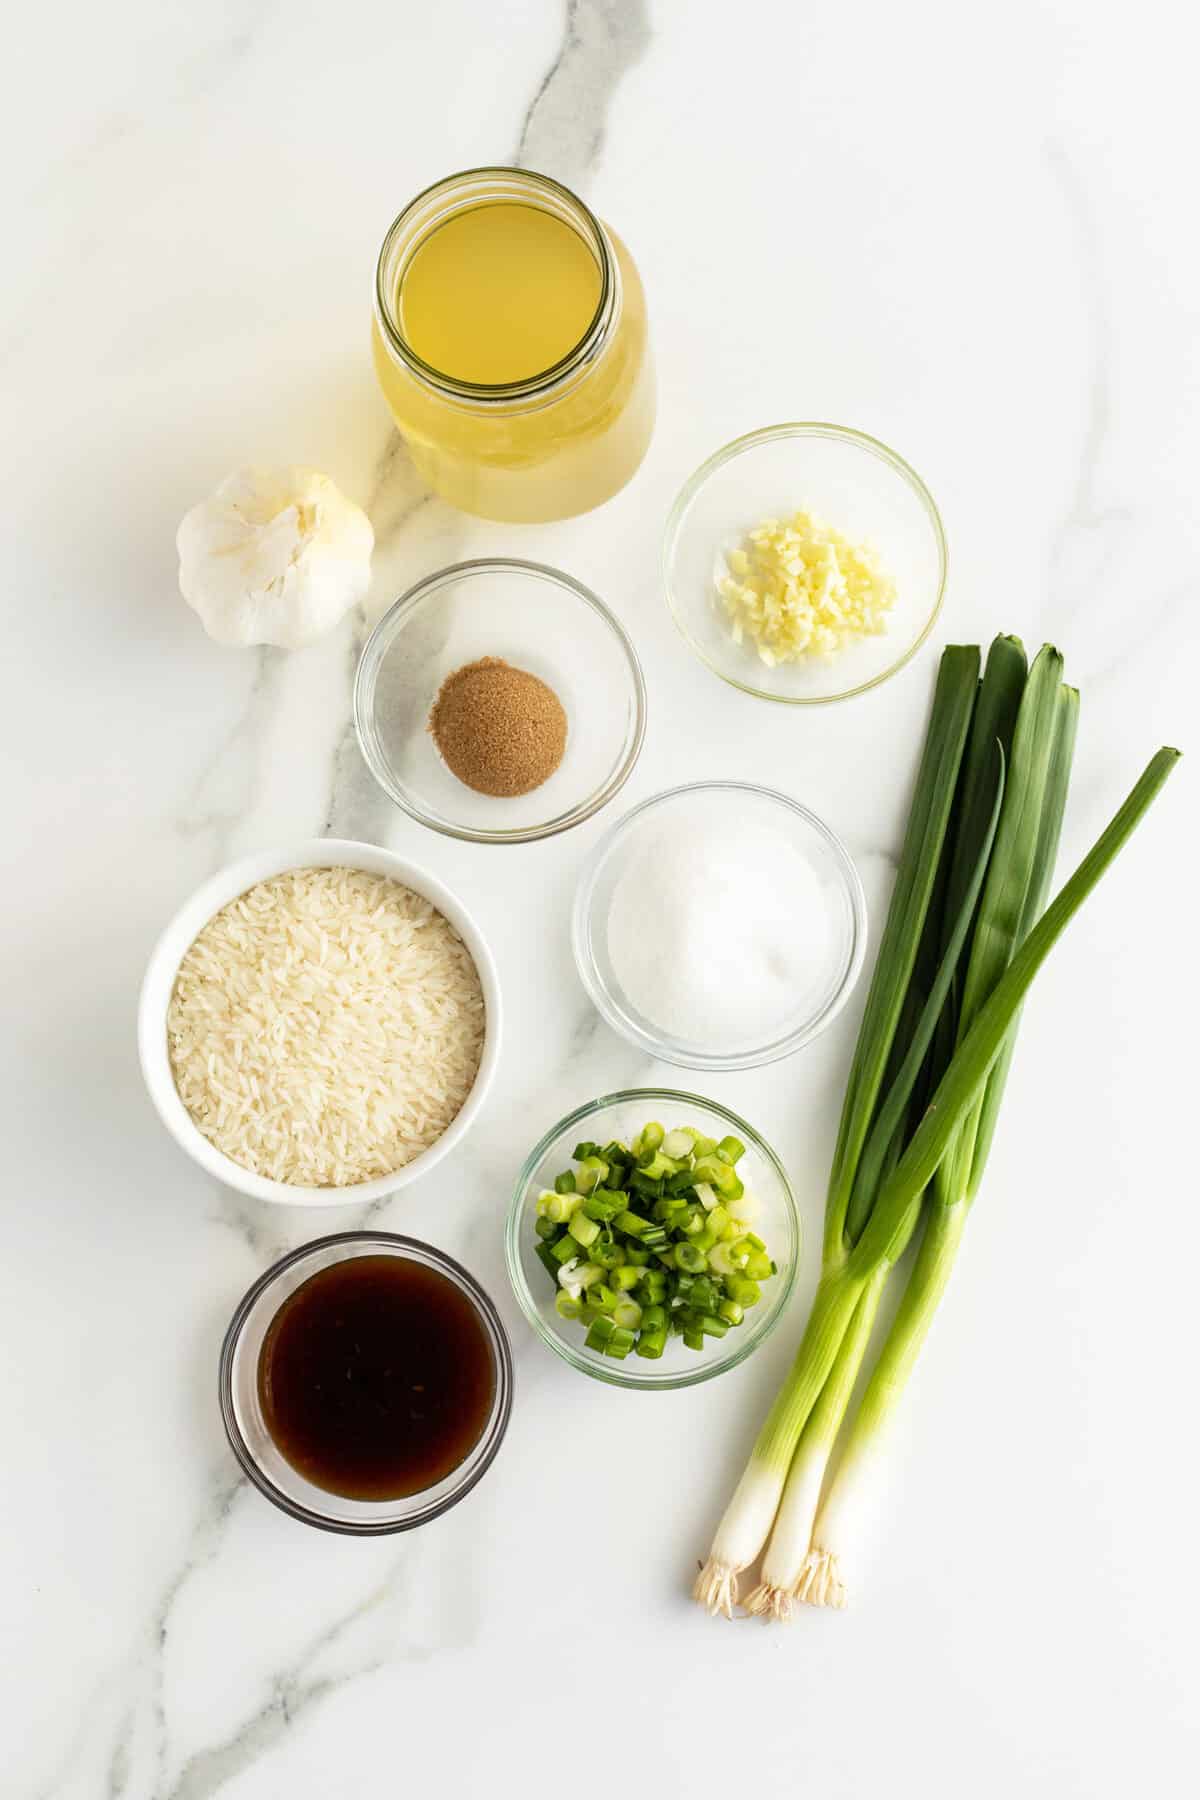 Teriyaki rice ingredients in small bowls